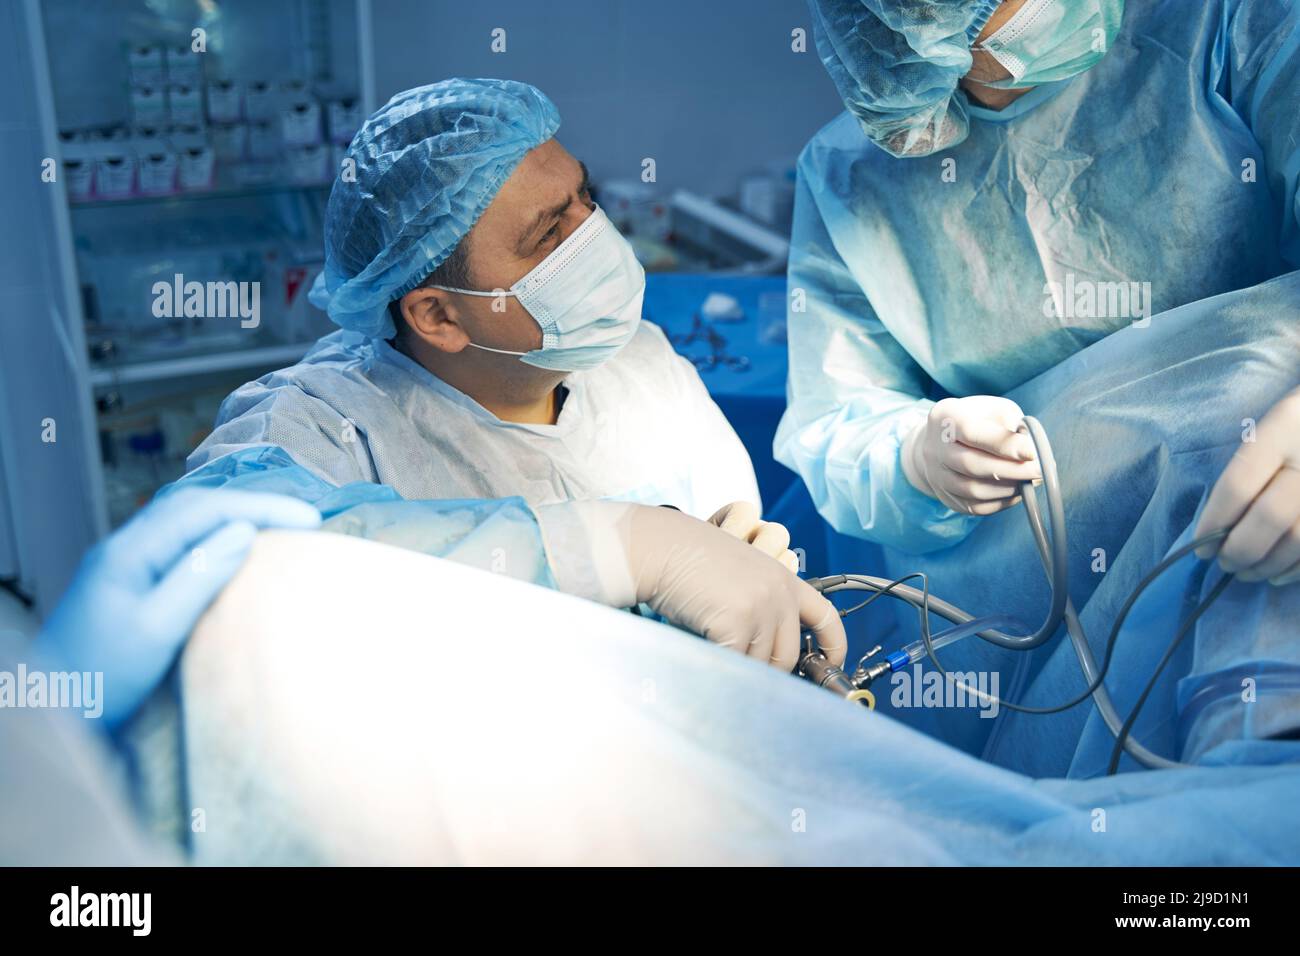 Surgeon performing minimally invasive surgery with laparoscope Stock Photo